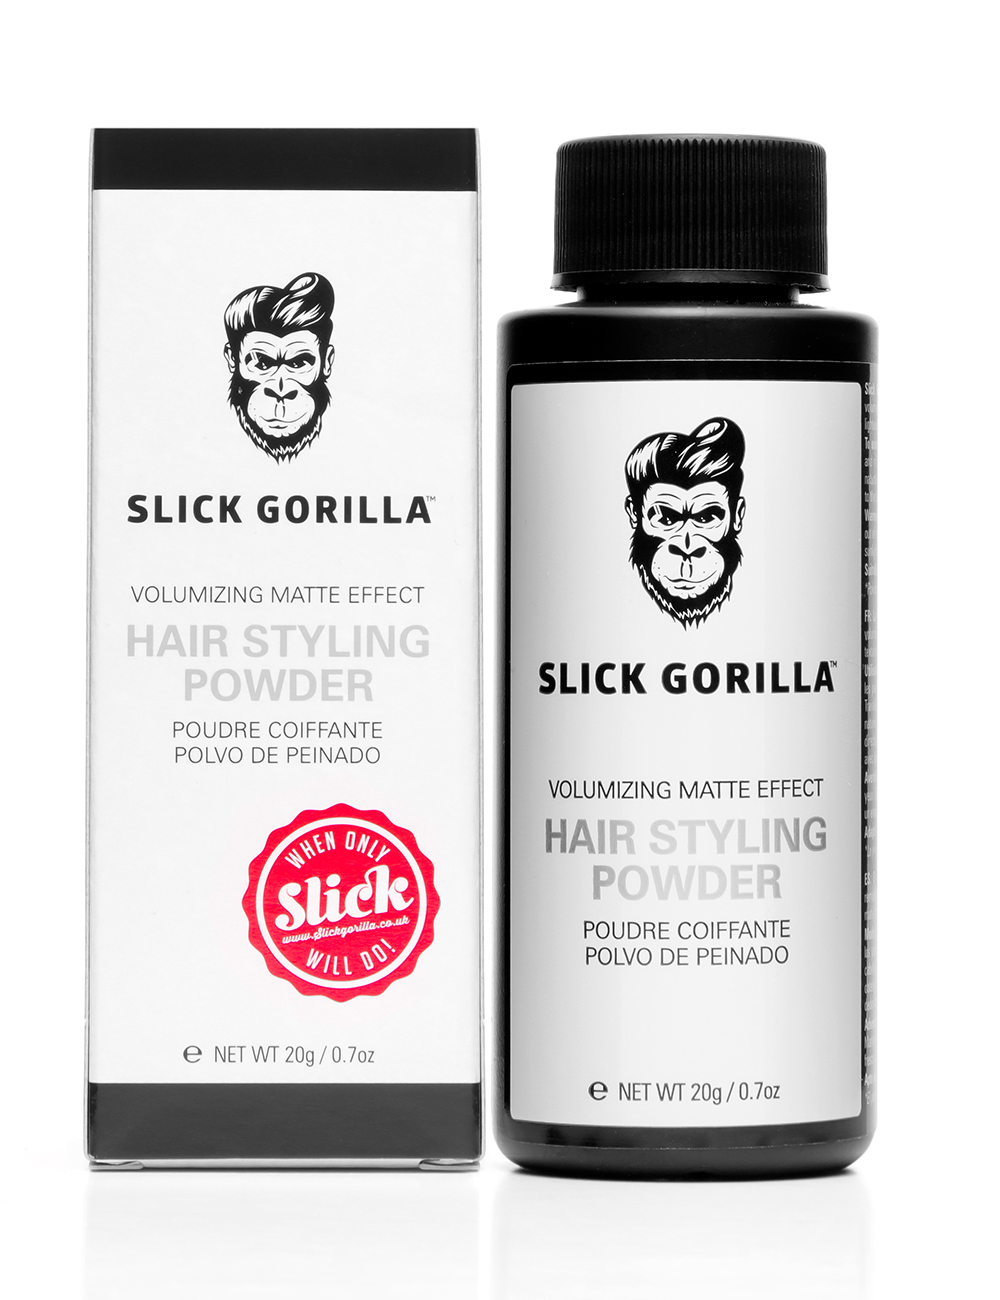 Slick Gorilla Hair Styling Powder Volumziing Matte Effect Product 20g With Box